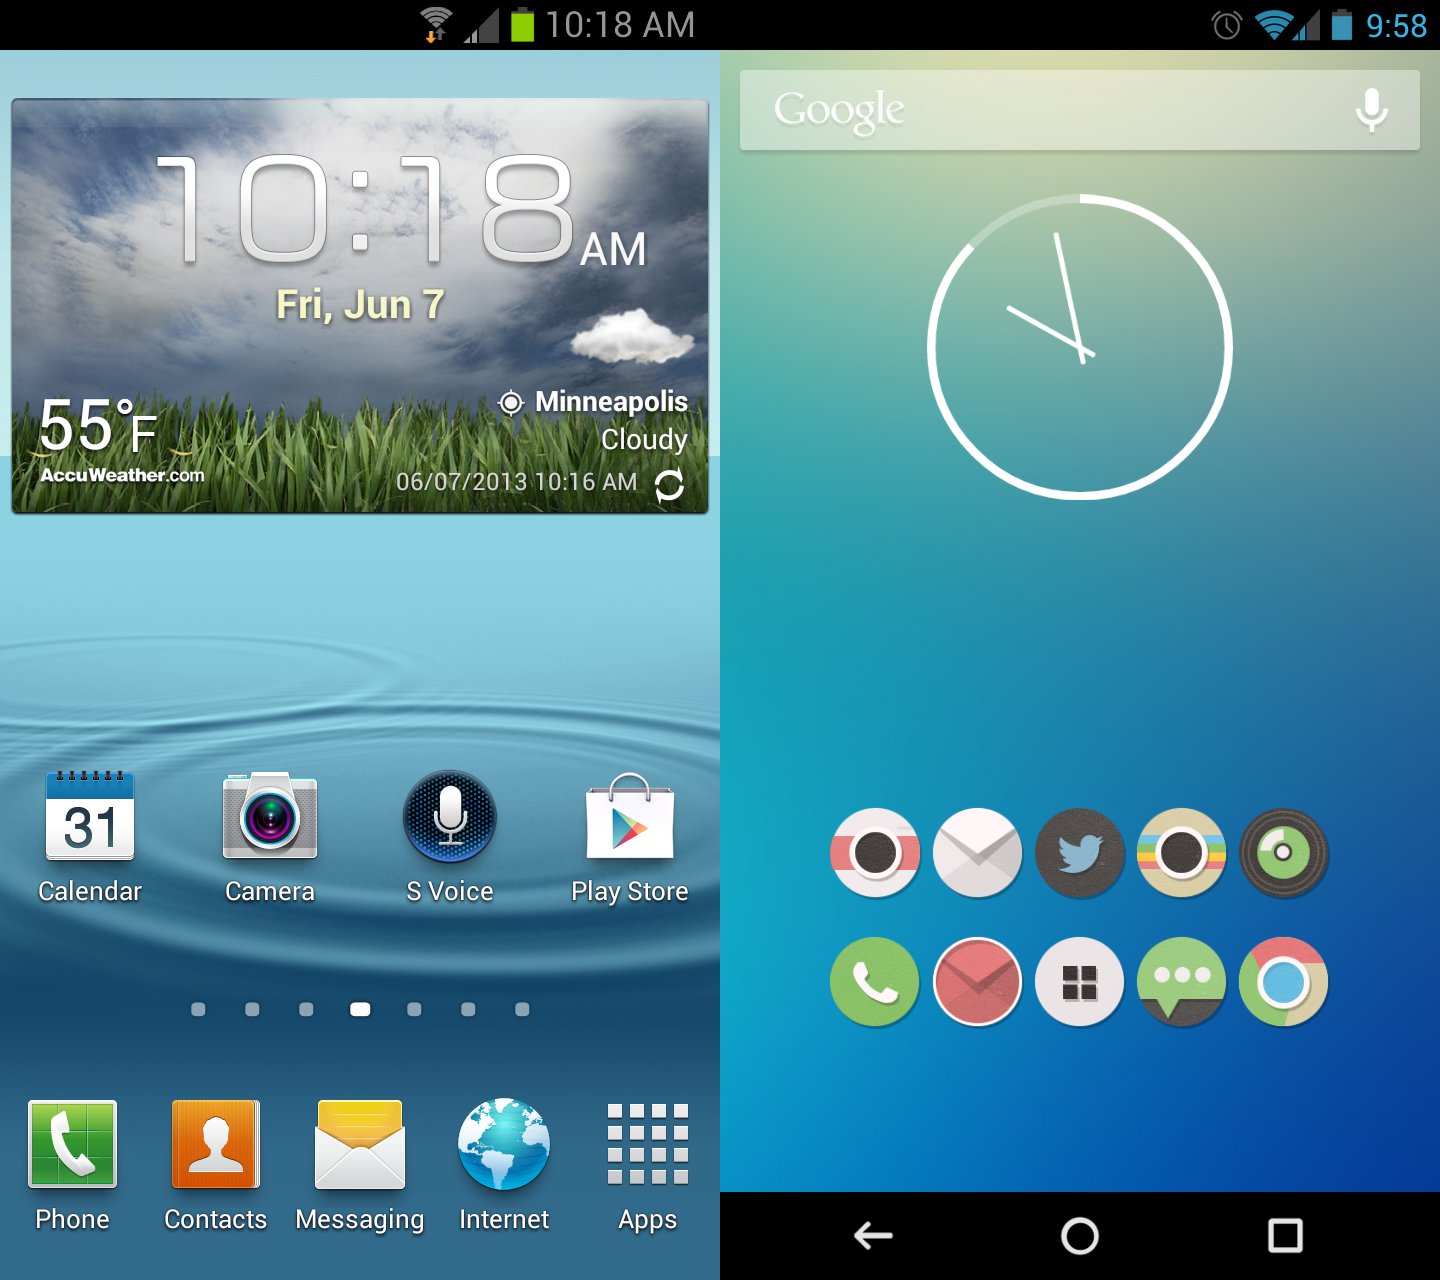 Запуск экрана андроид. Скрин экрана андроид. Экран телефона андроид. Скриншот экрана Android. Главный экран андроид.